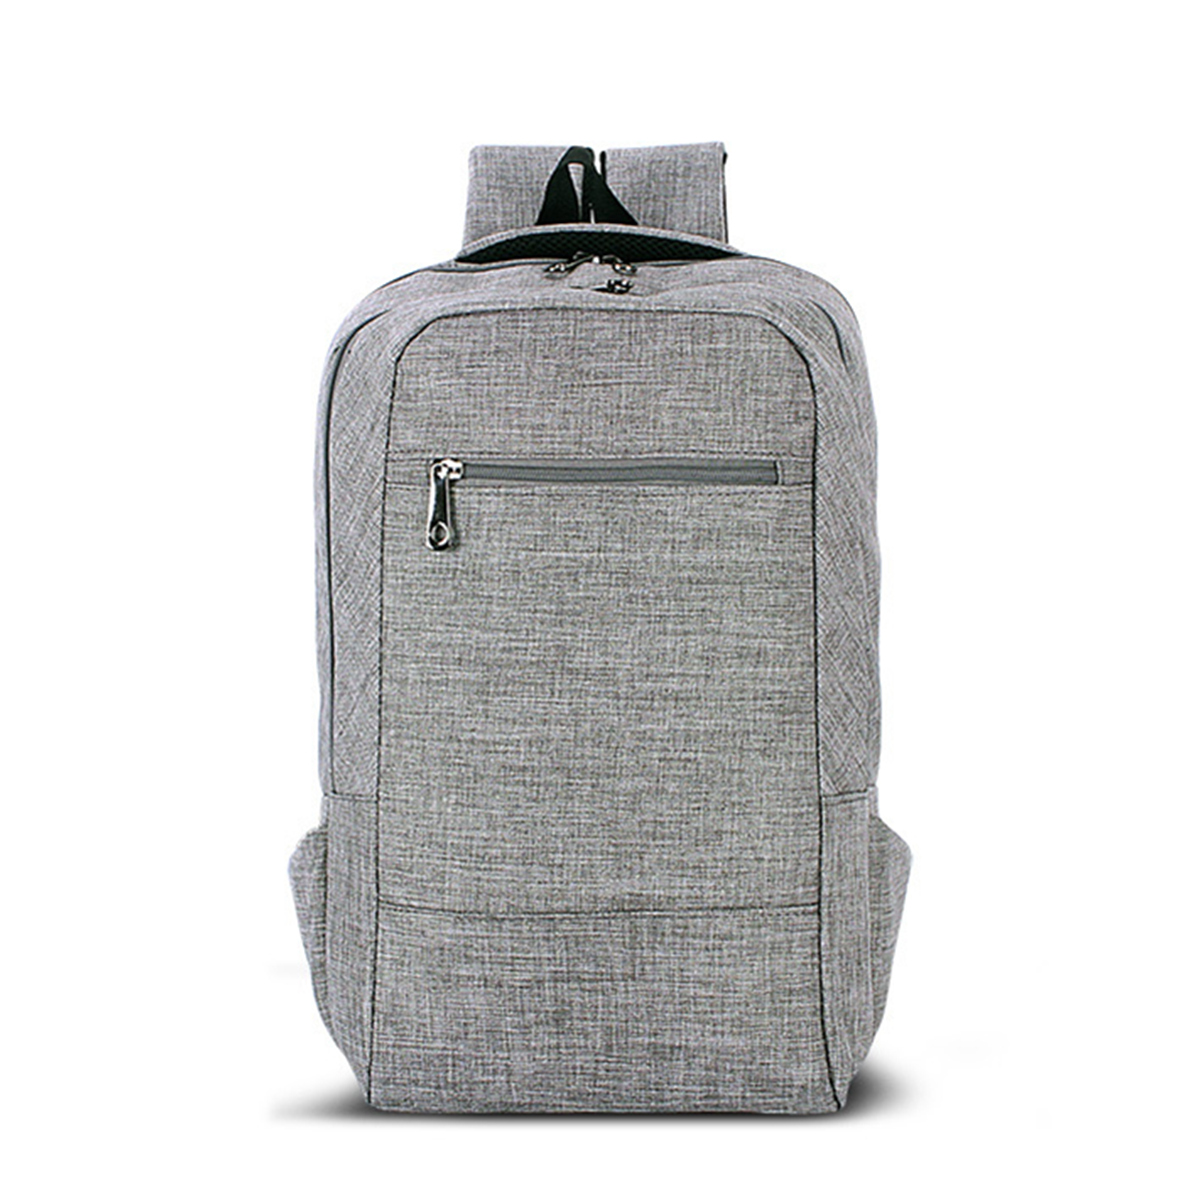 IPReereg-156inch-Men-Laptop-Canvas-Backpack-School-Business-Travel-Shoulder-Bag-Rucksack-1193578-3